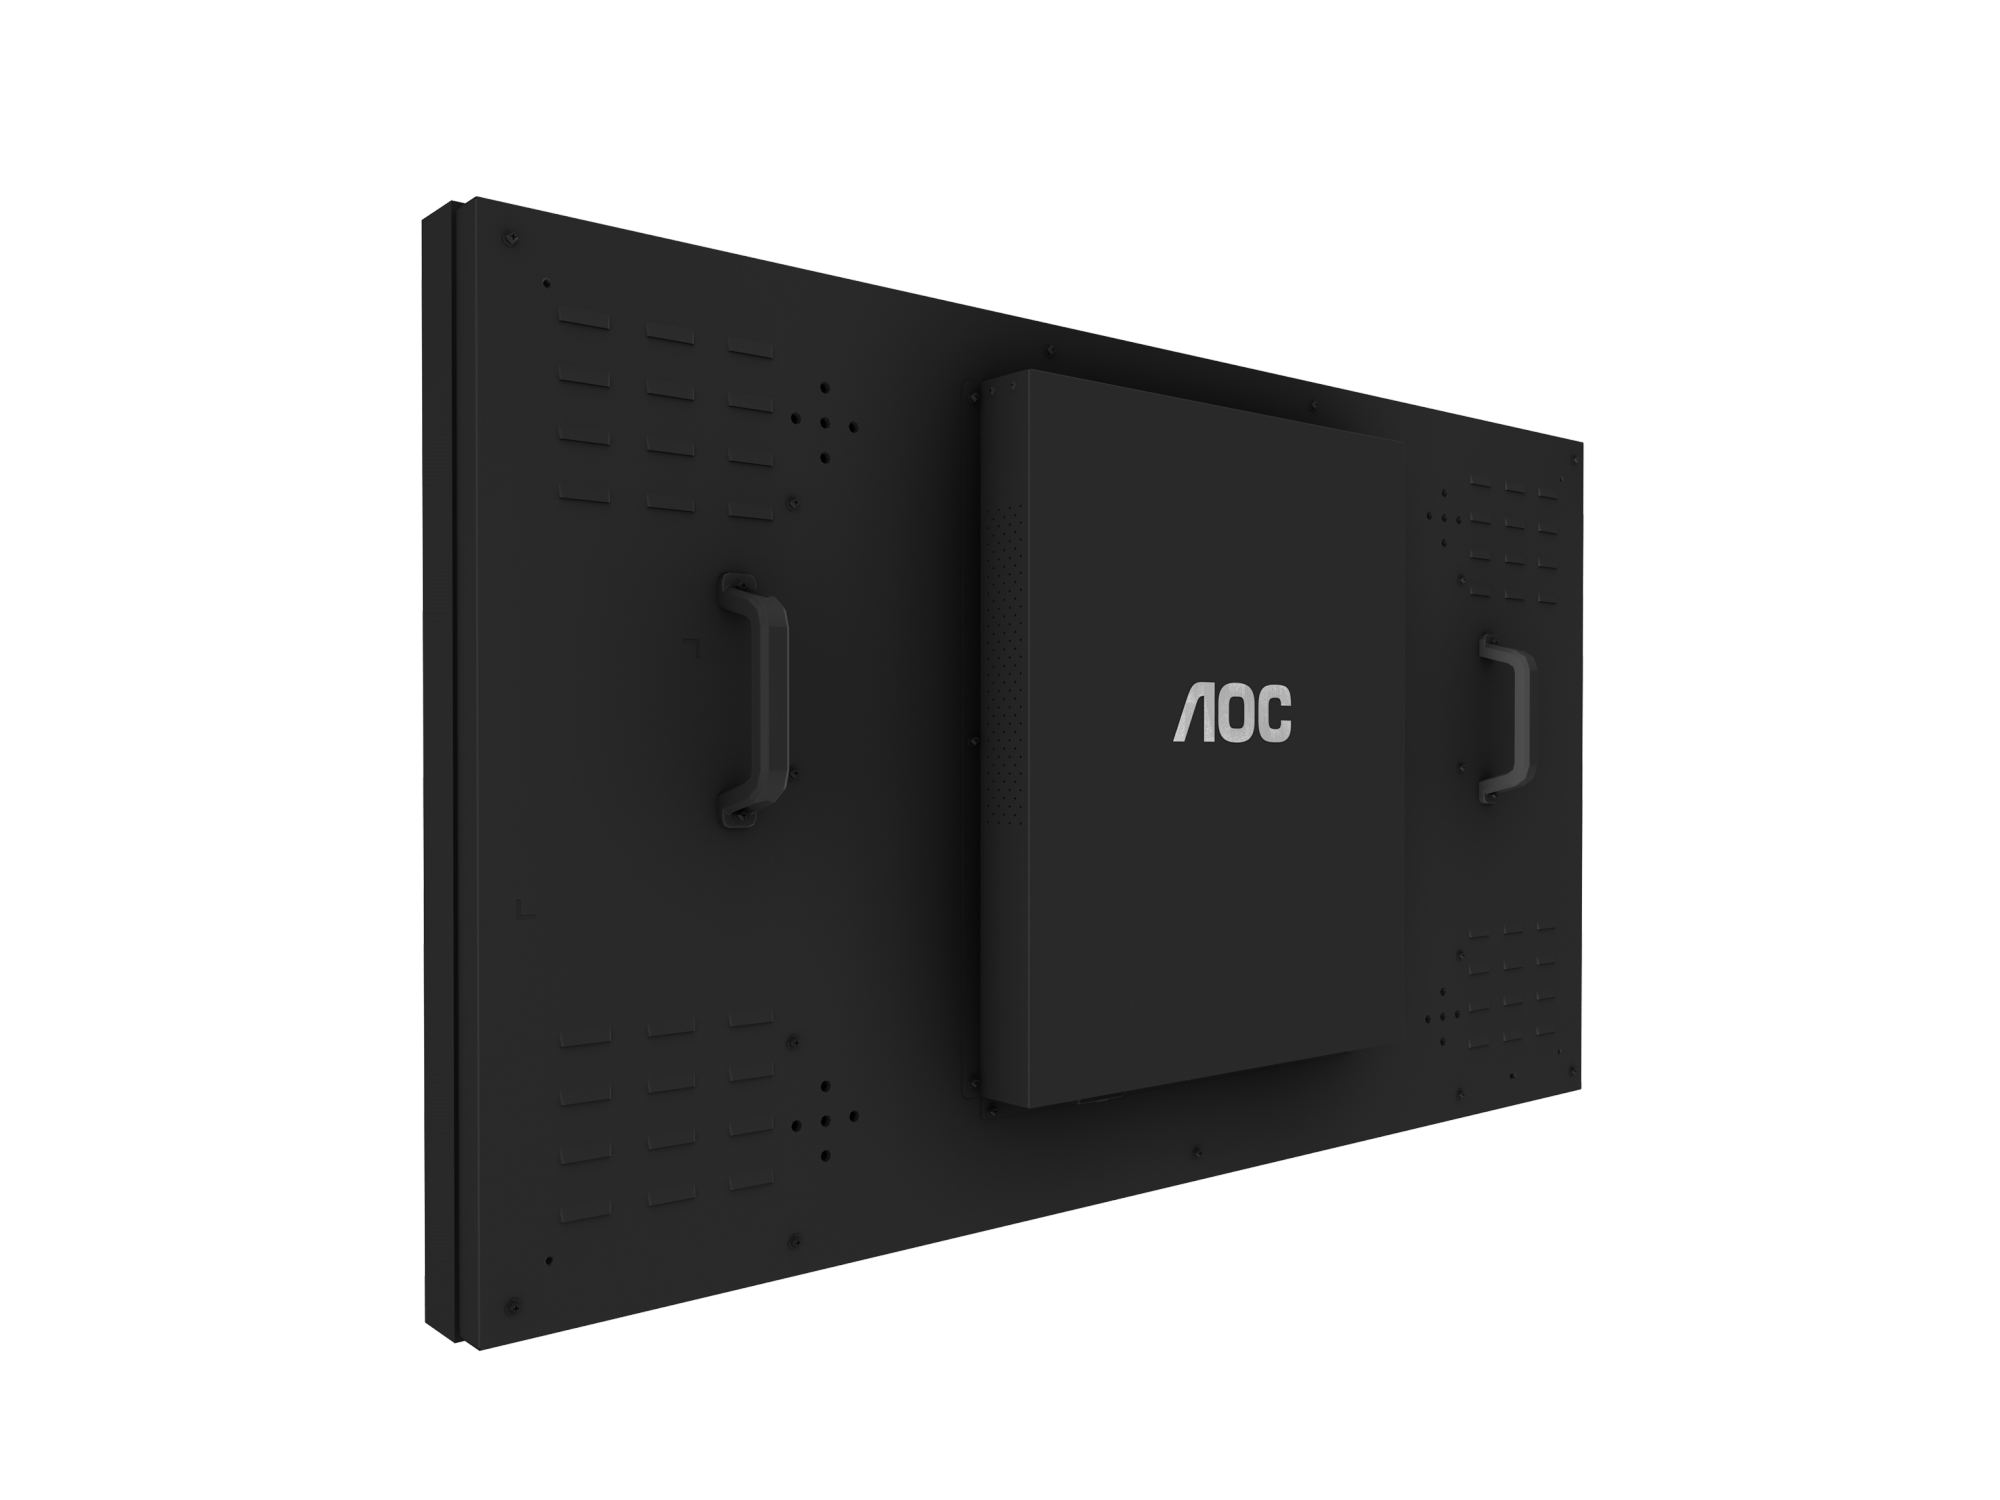 46D9115 Video Wall Display - AOC Monitor